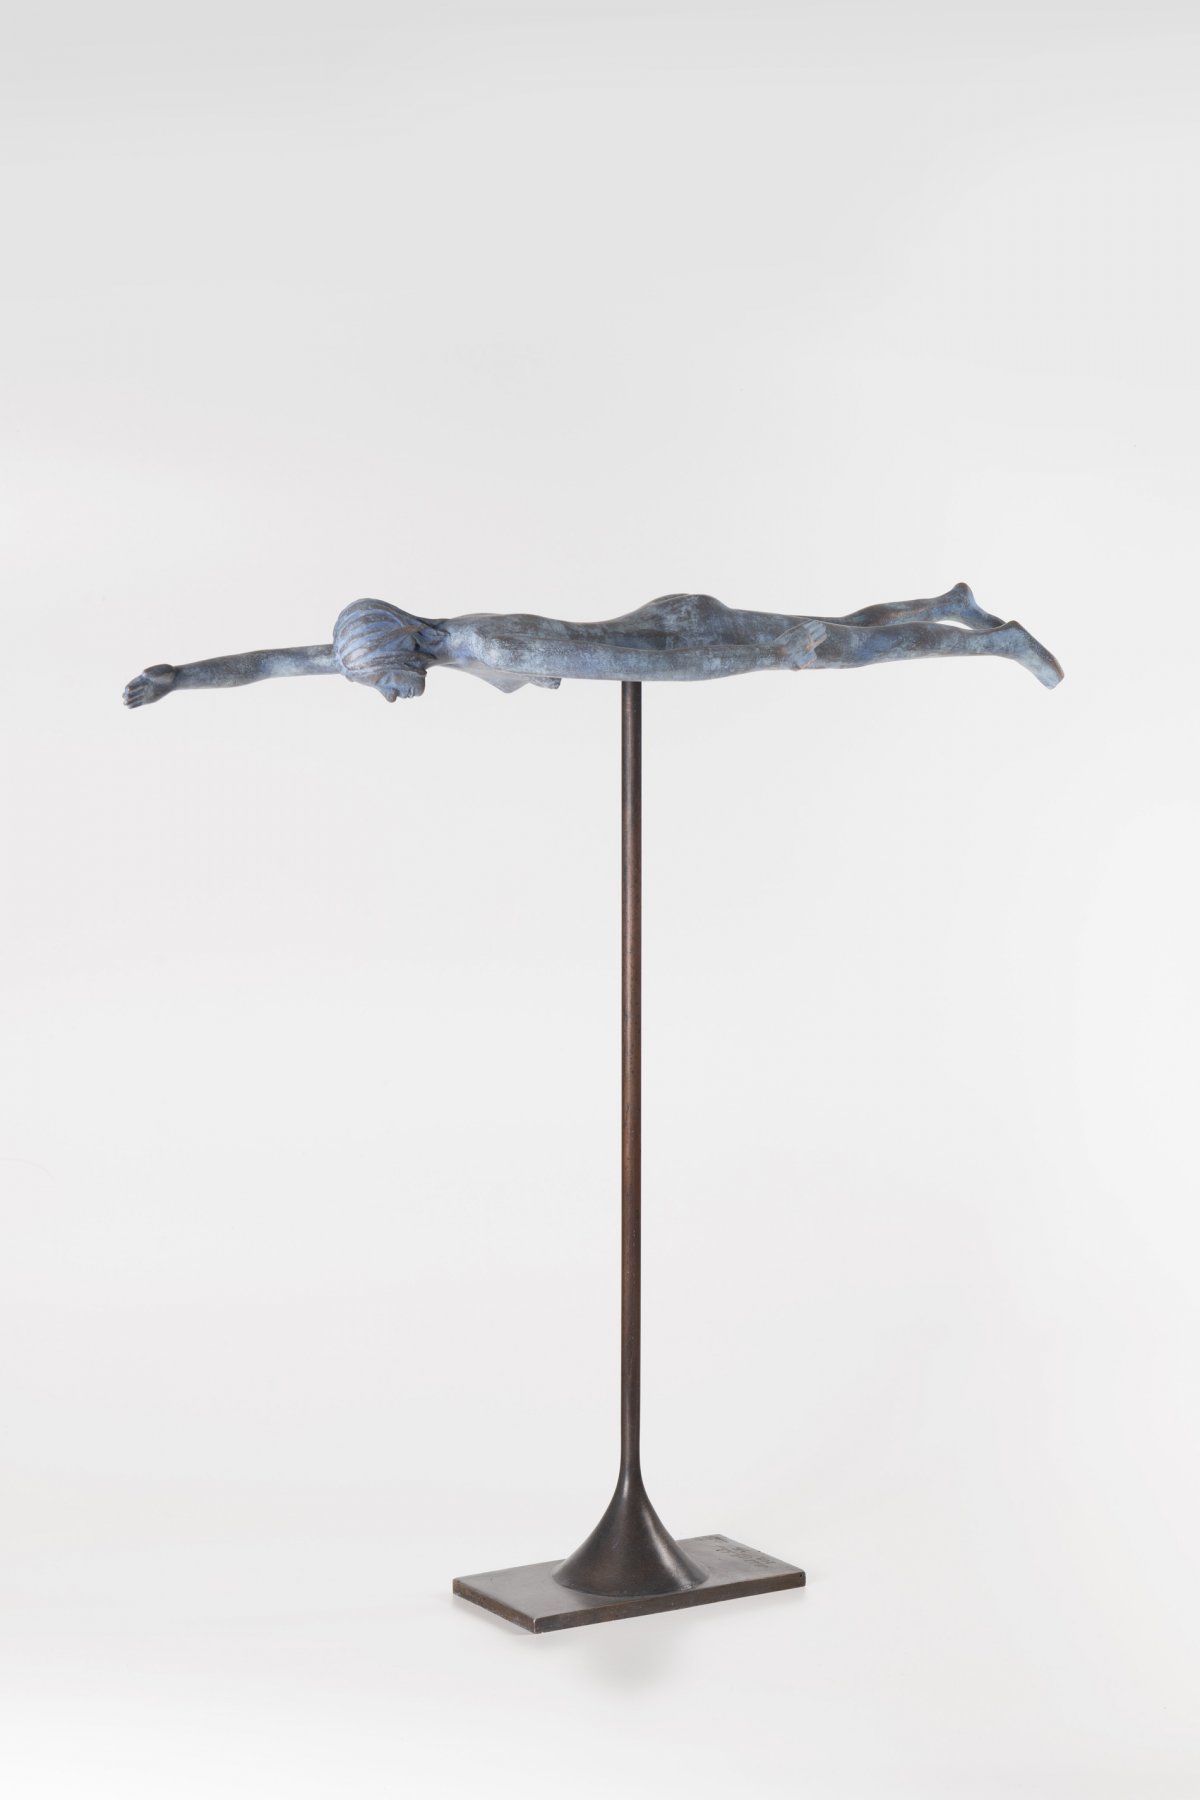 2019, Vzduchoplavkyně-Snílek 2 , Bronz,48 cm,2019,  Flying dreamer 2, Bronze, 48 cm